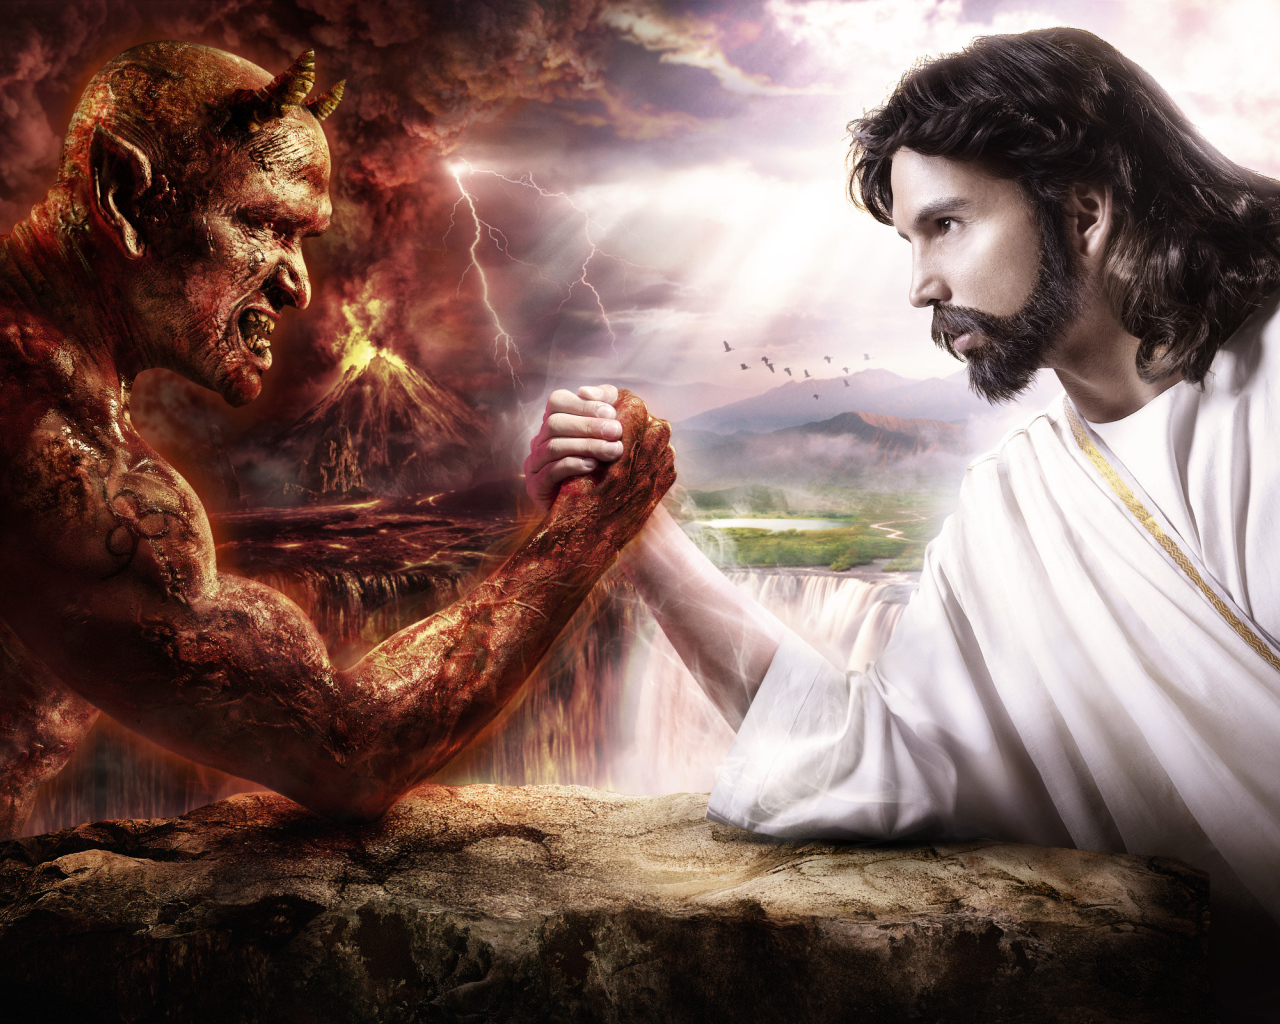 Бог против дьявола